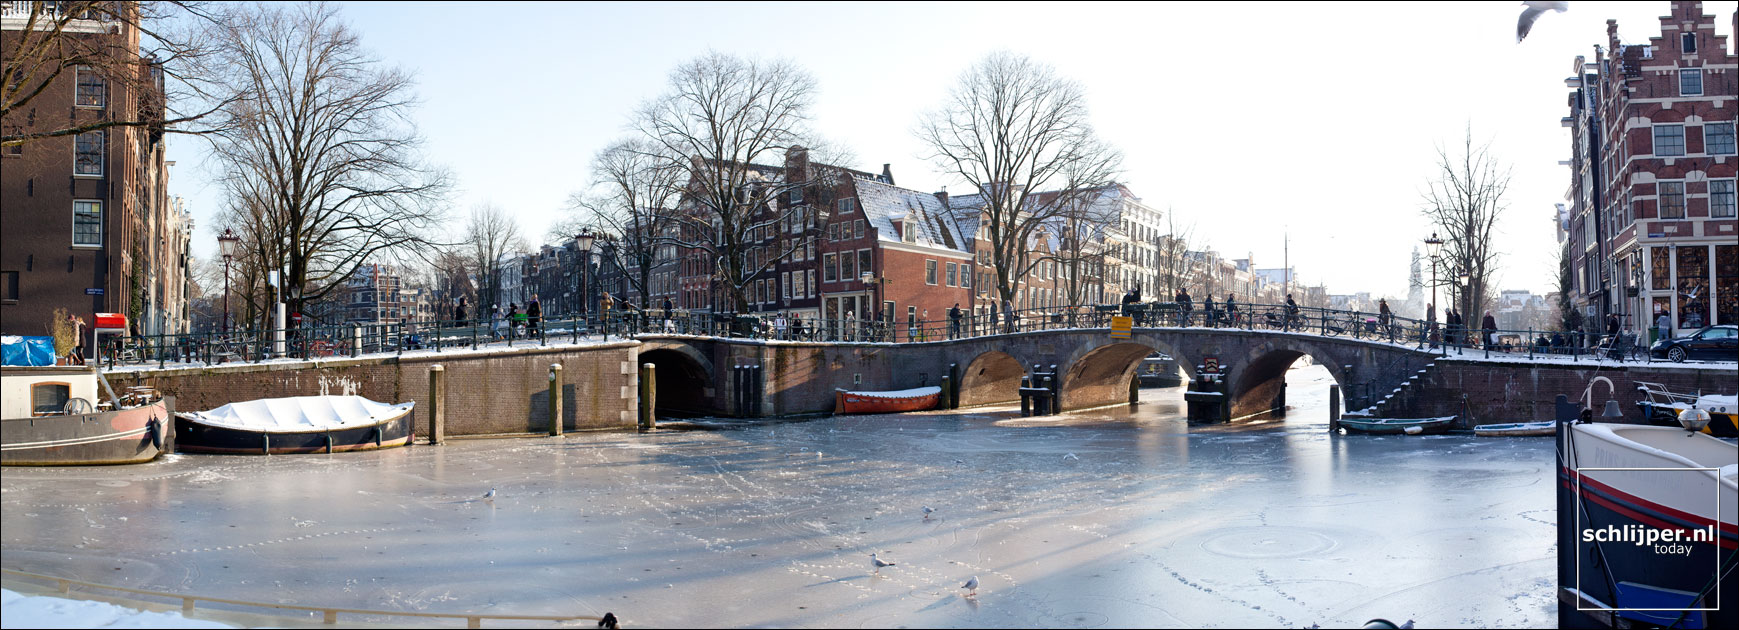 Nederland, Amsterdam, 4 februari 2012